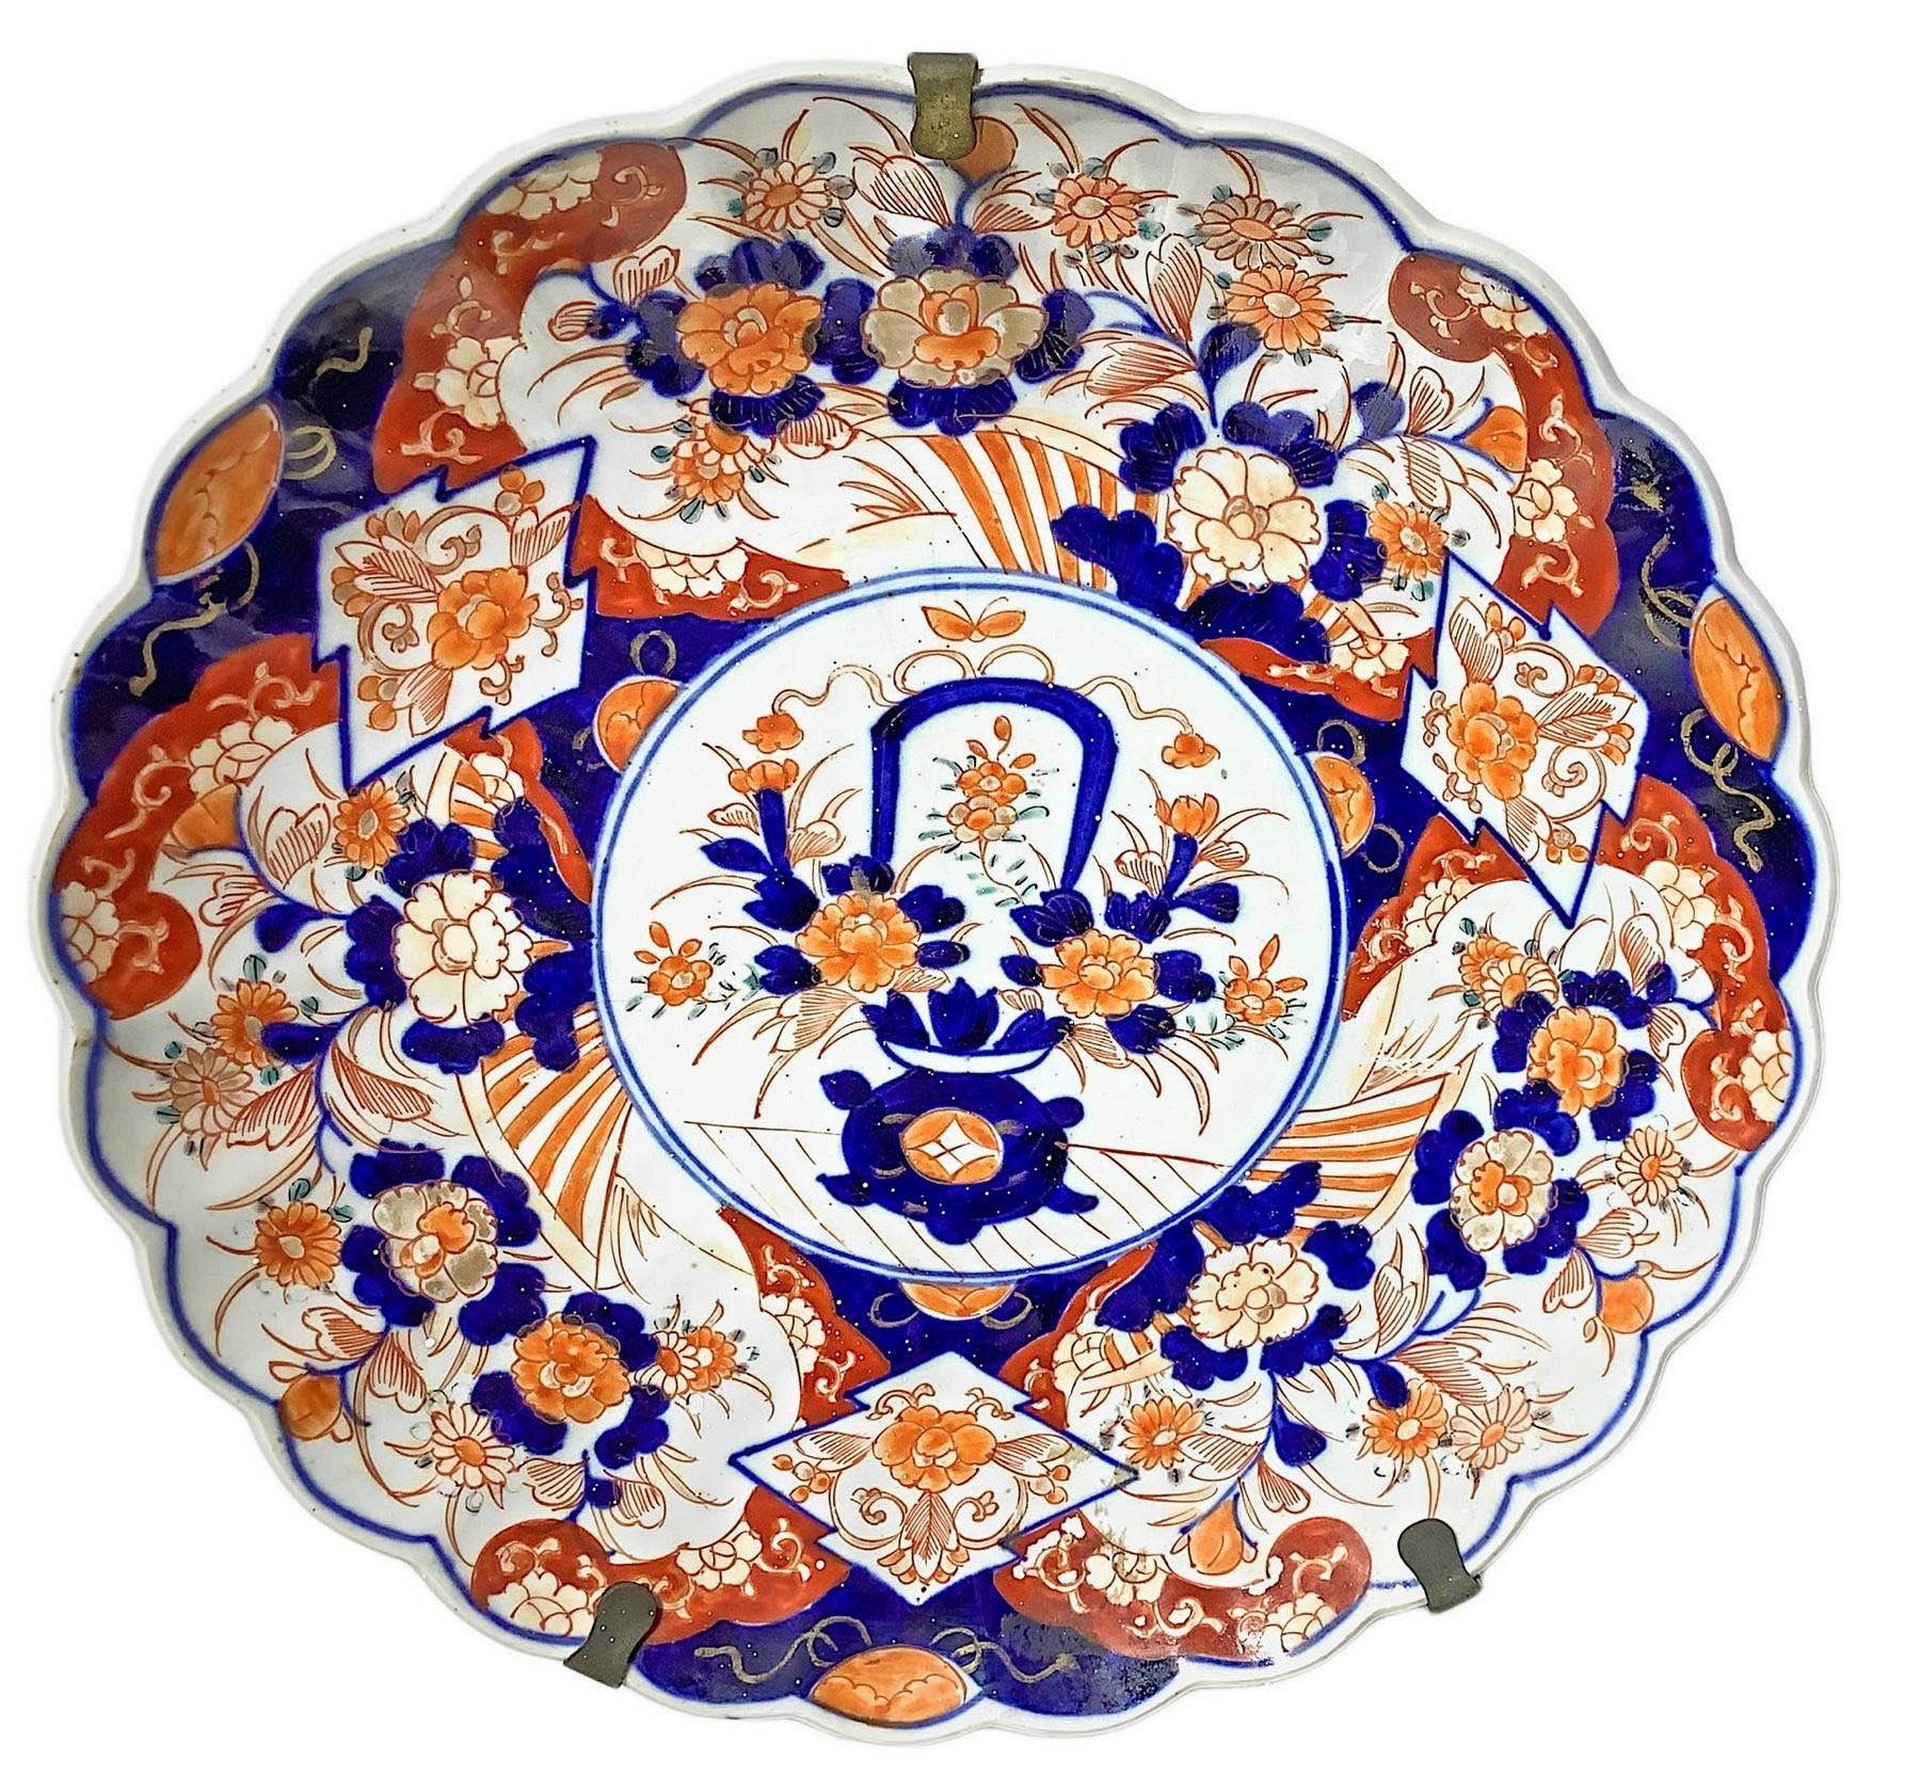 Imari porcelain plate, XVIII century